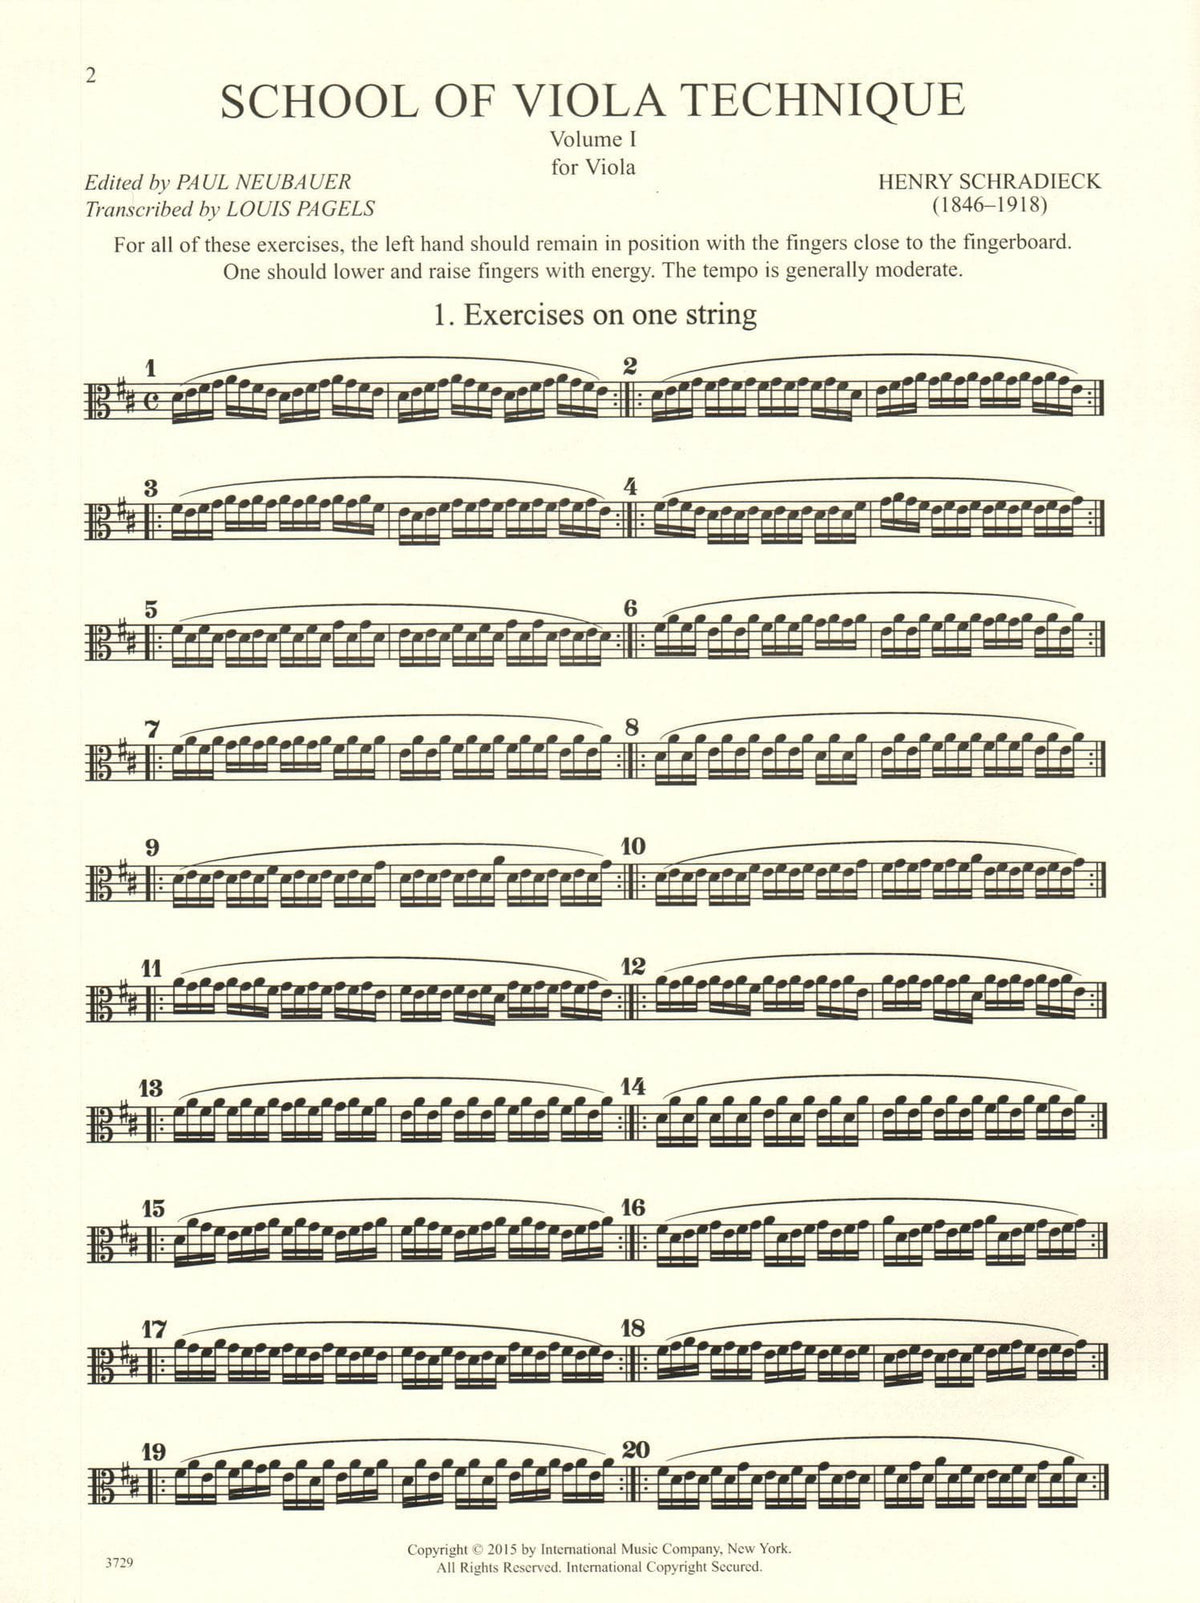 Schradieck, Henry - School of Viola Technique - Volume 1 - for Viola - Edited by Neubauer/Pagels - International